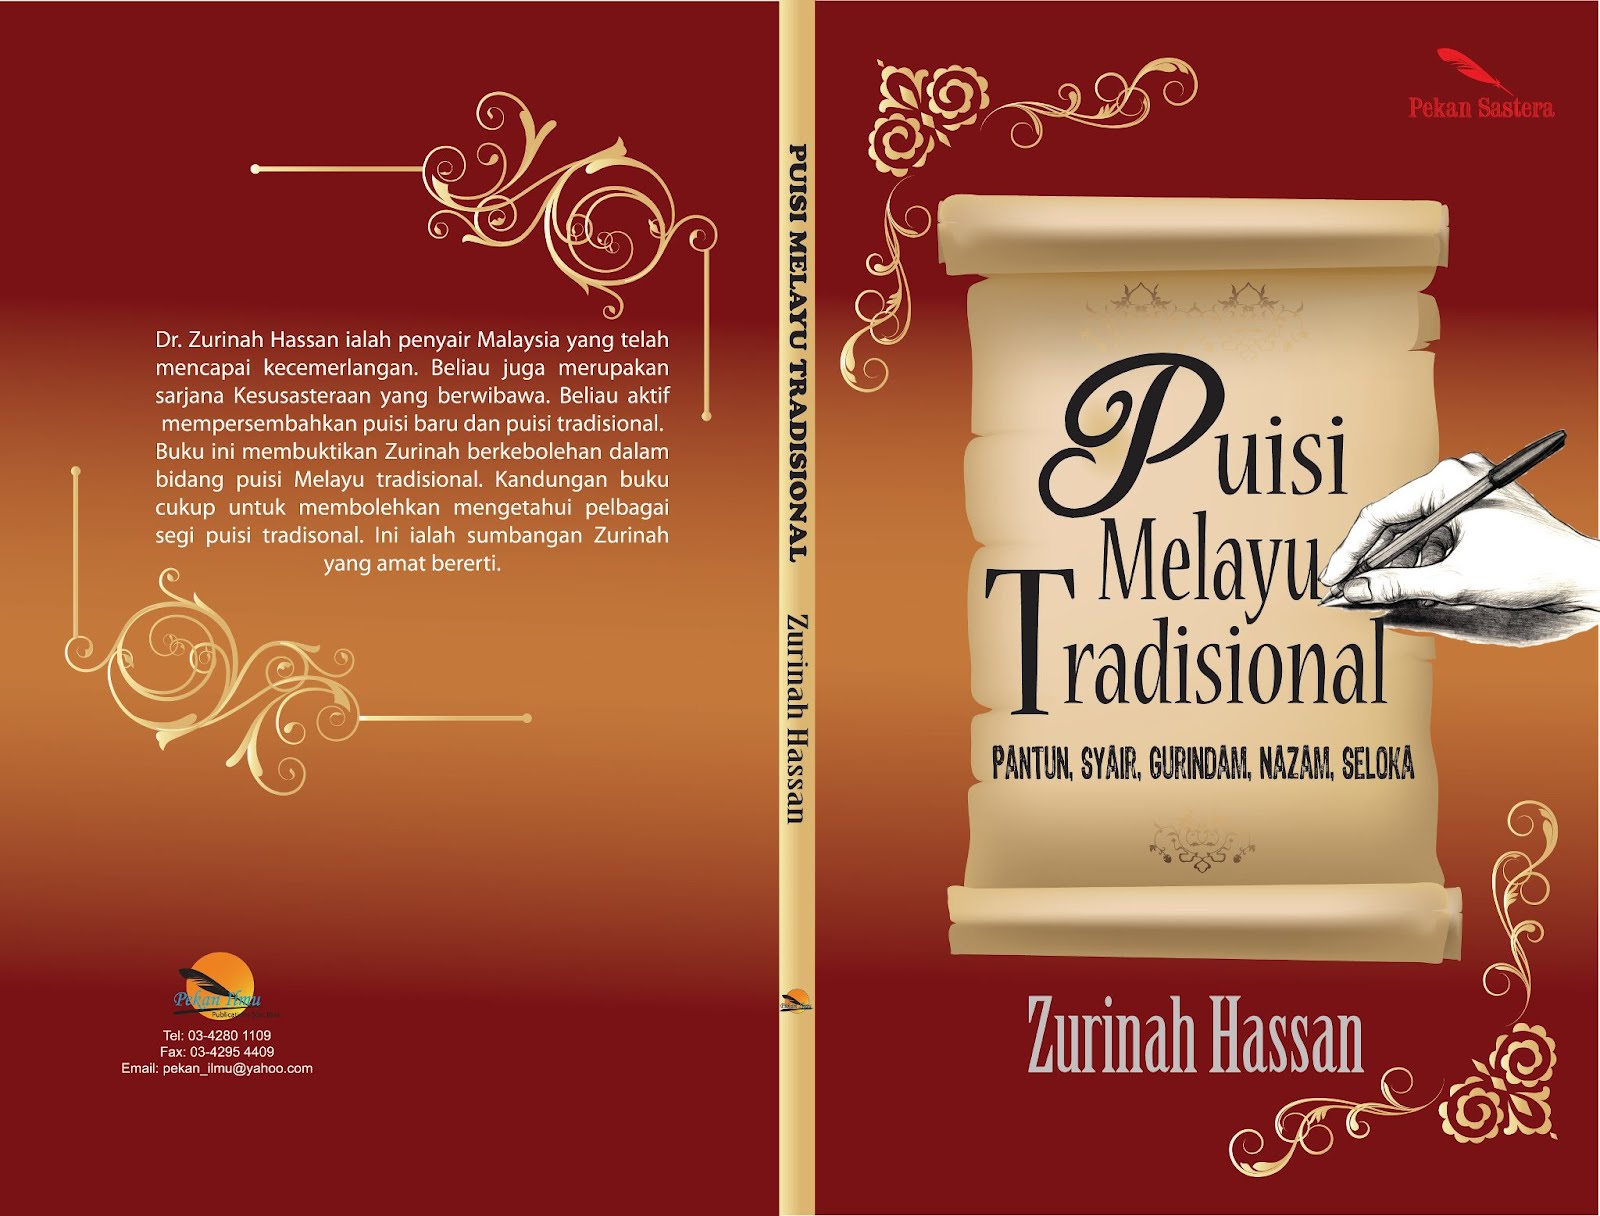 Puisi Melayu Tradisional - INTERPRETASI